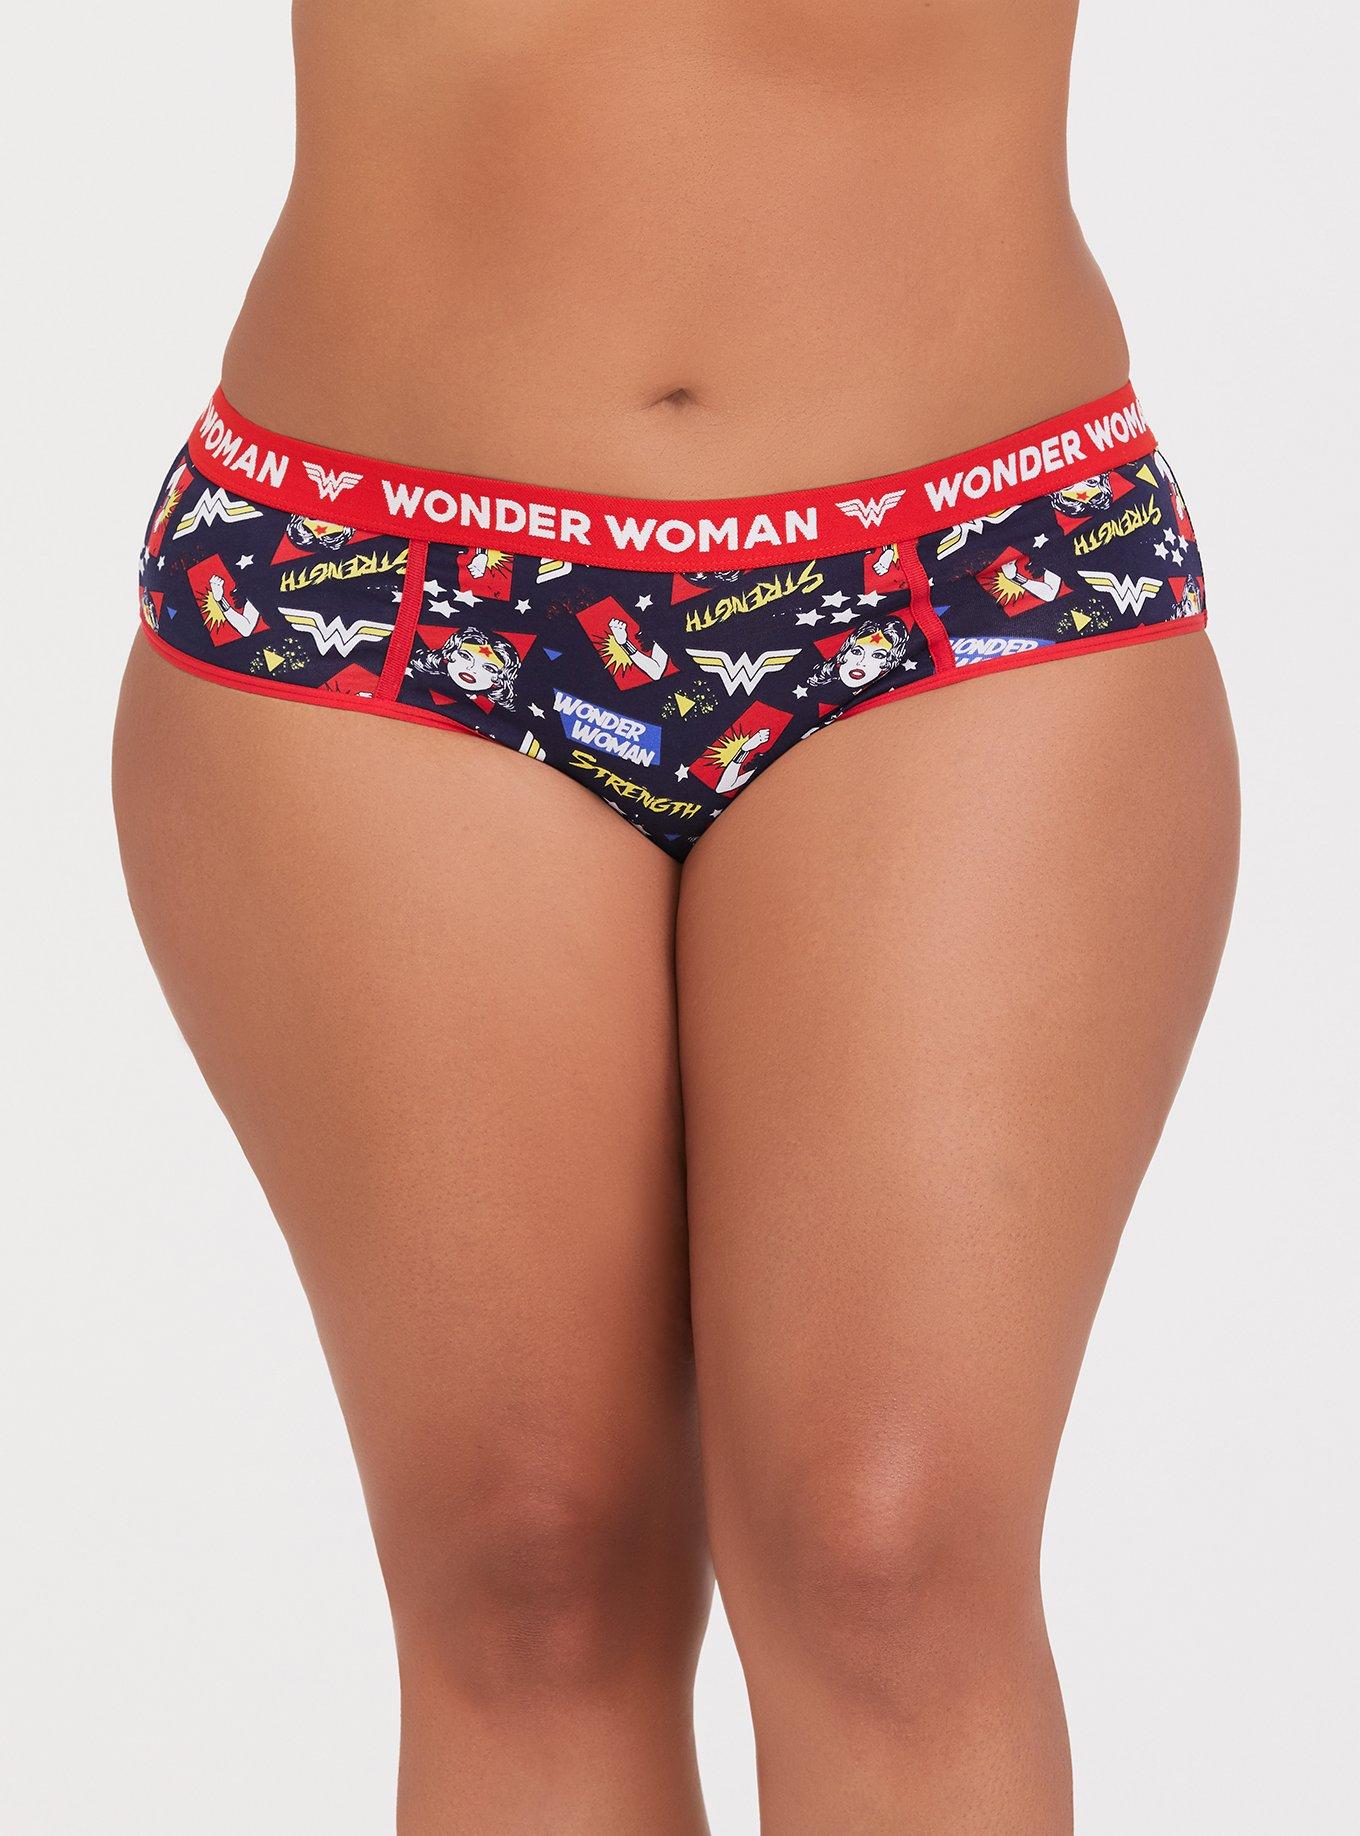 TORRID : Wonder Woman Star Print Foil Hipster Panty